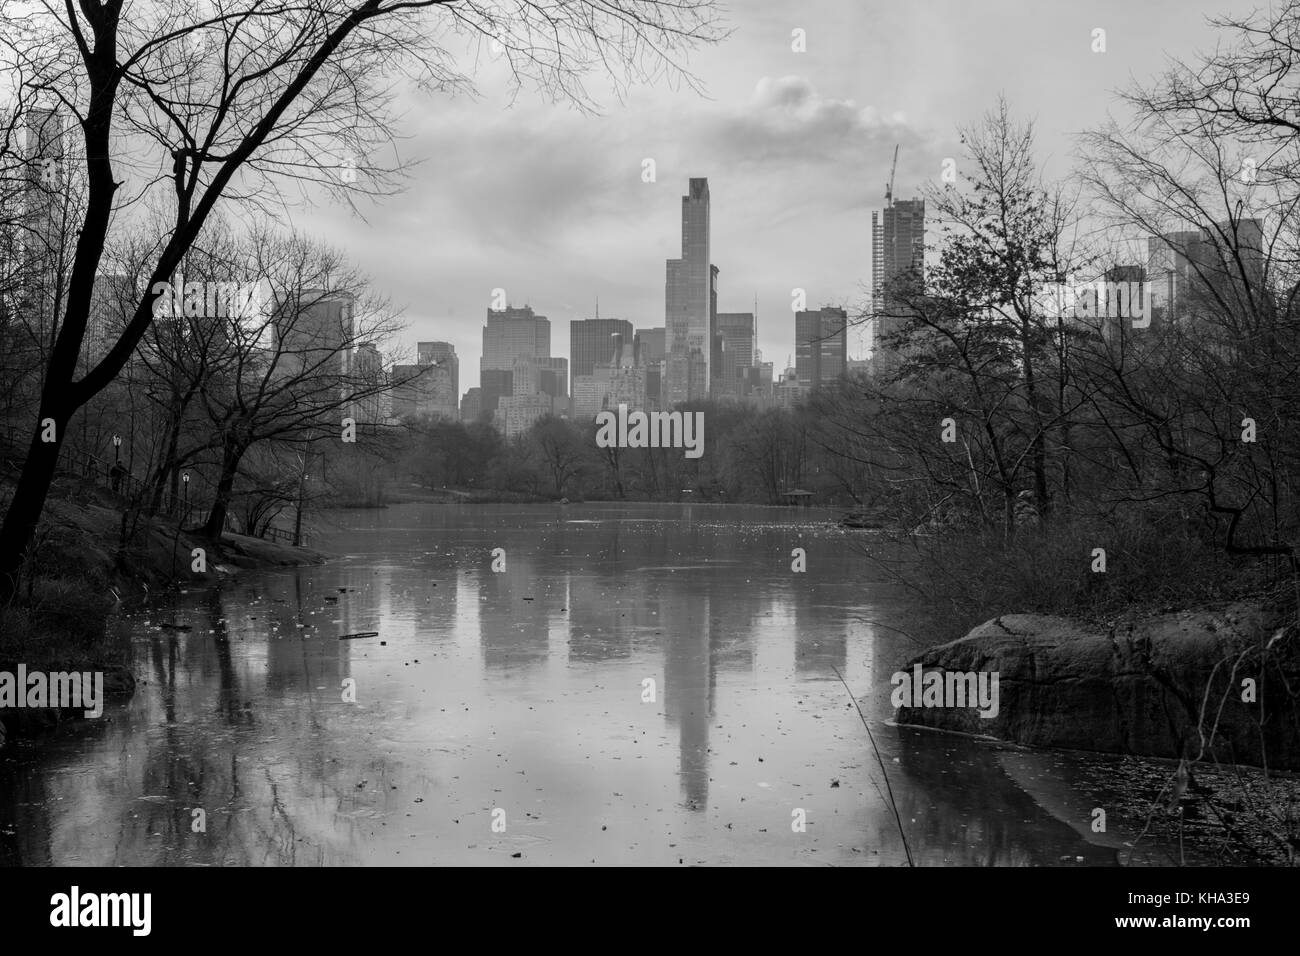 New York city Stockfoto